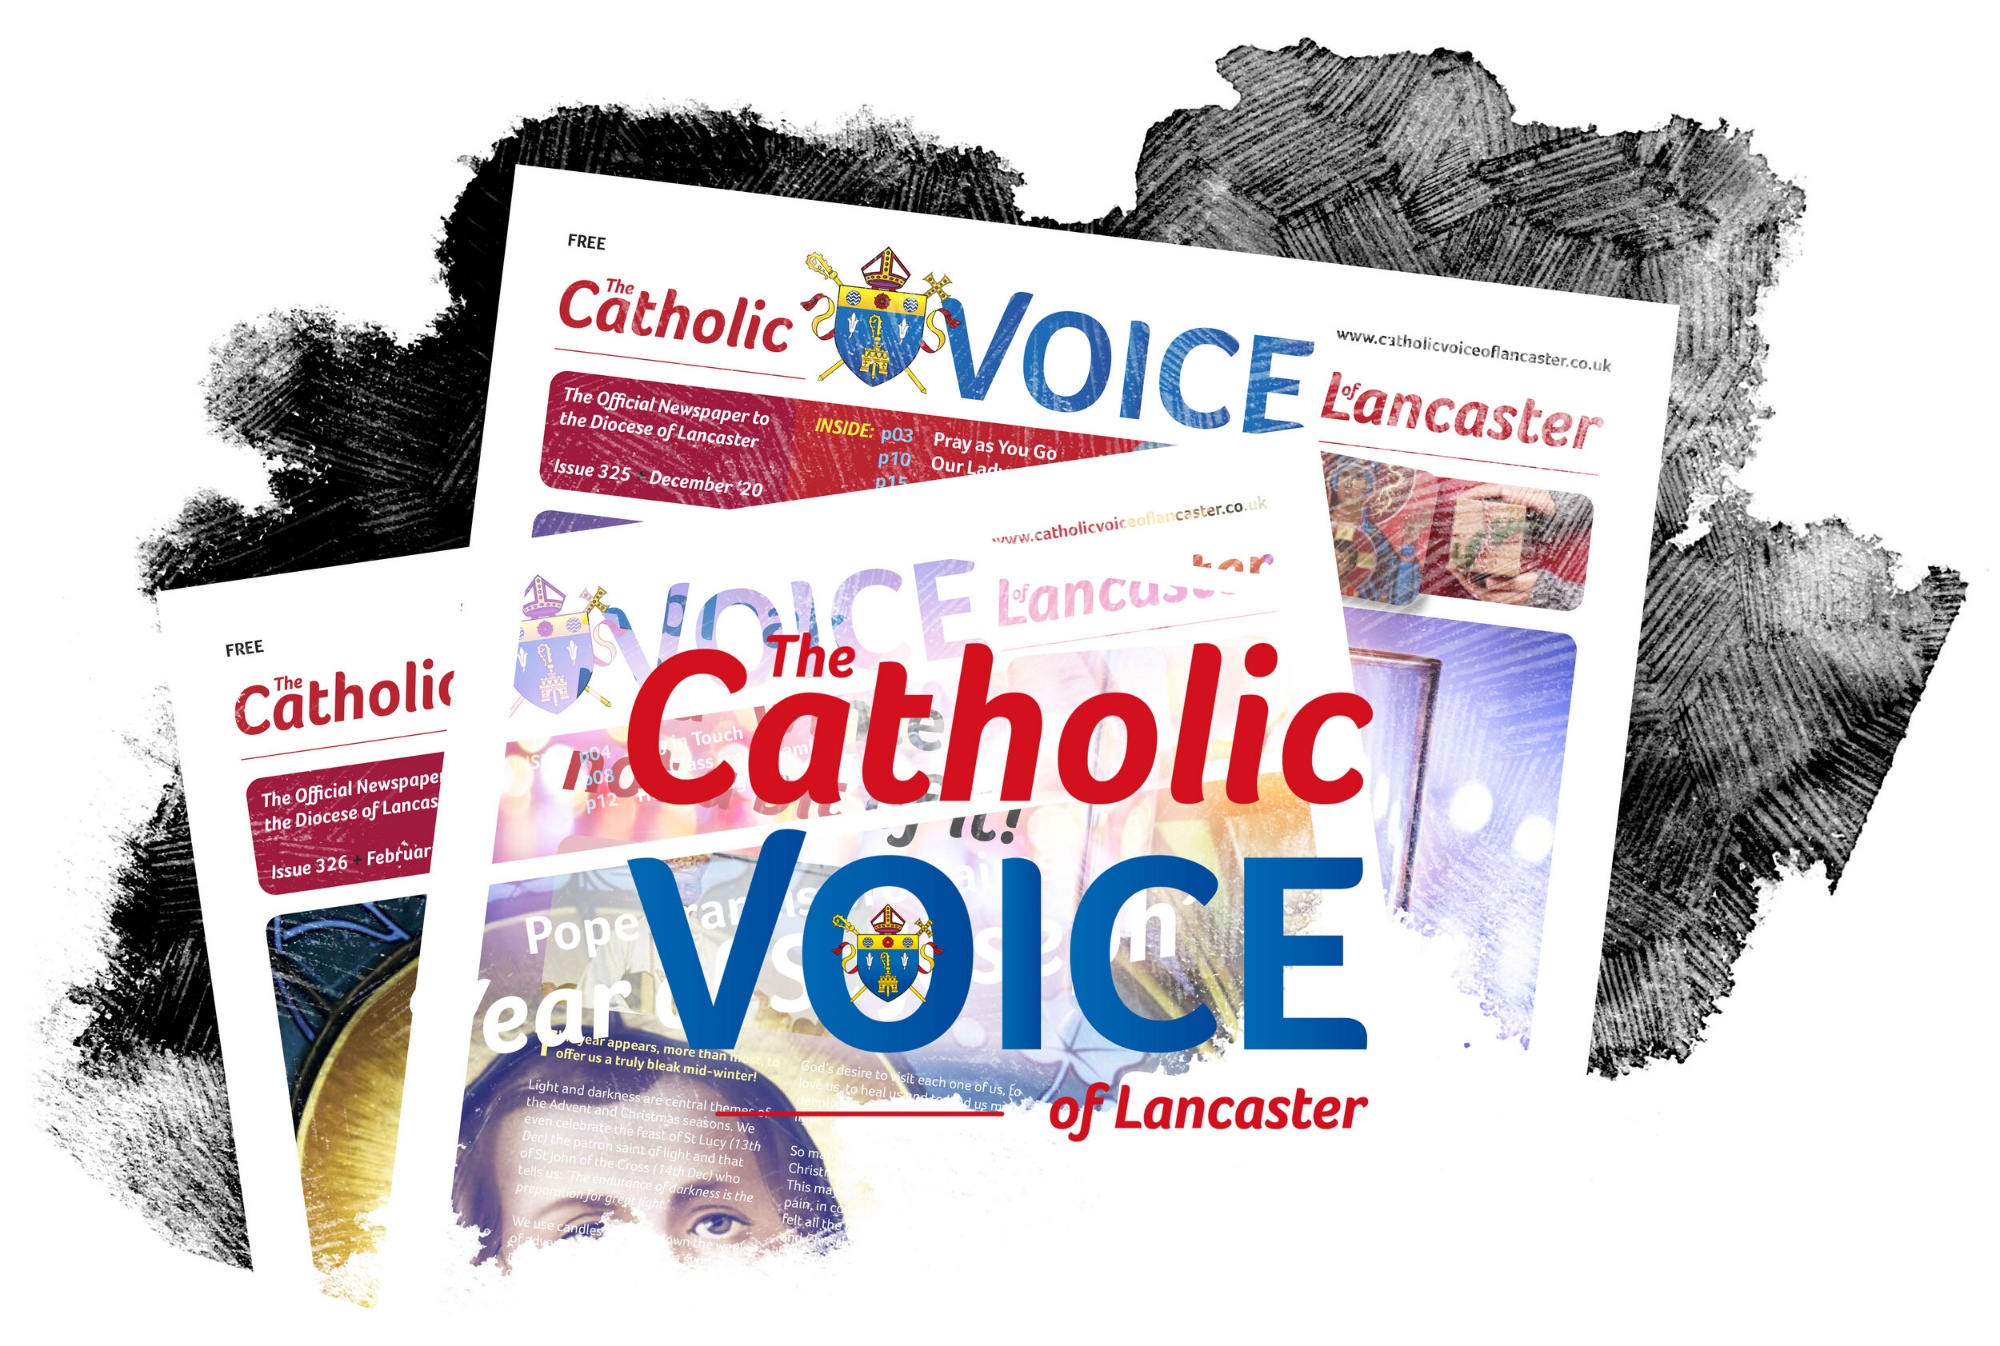 The Catholic voice of Lancaster